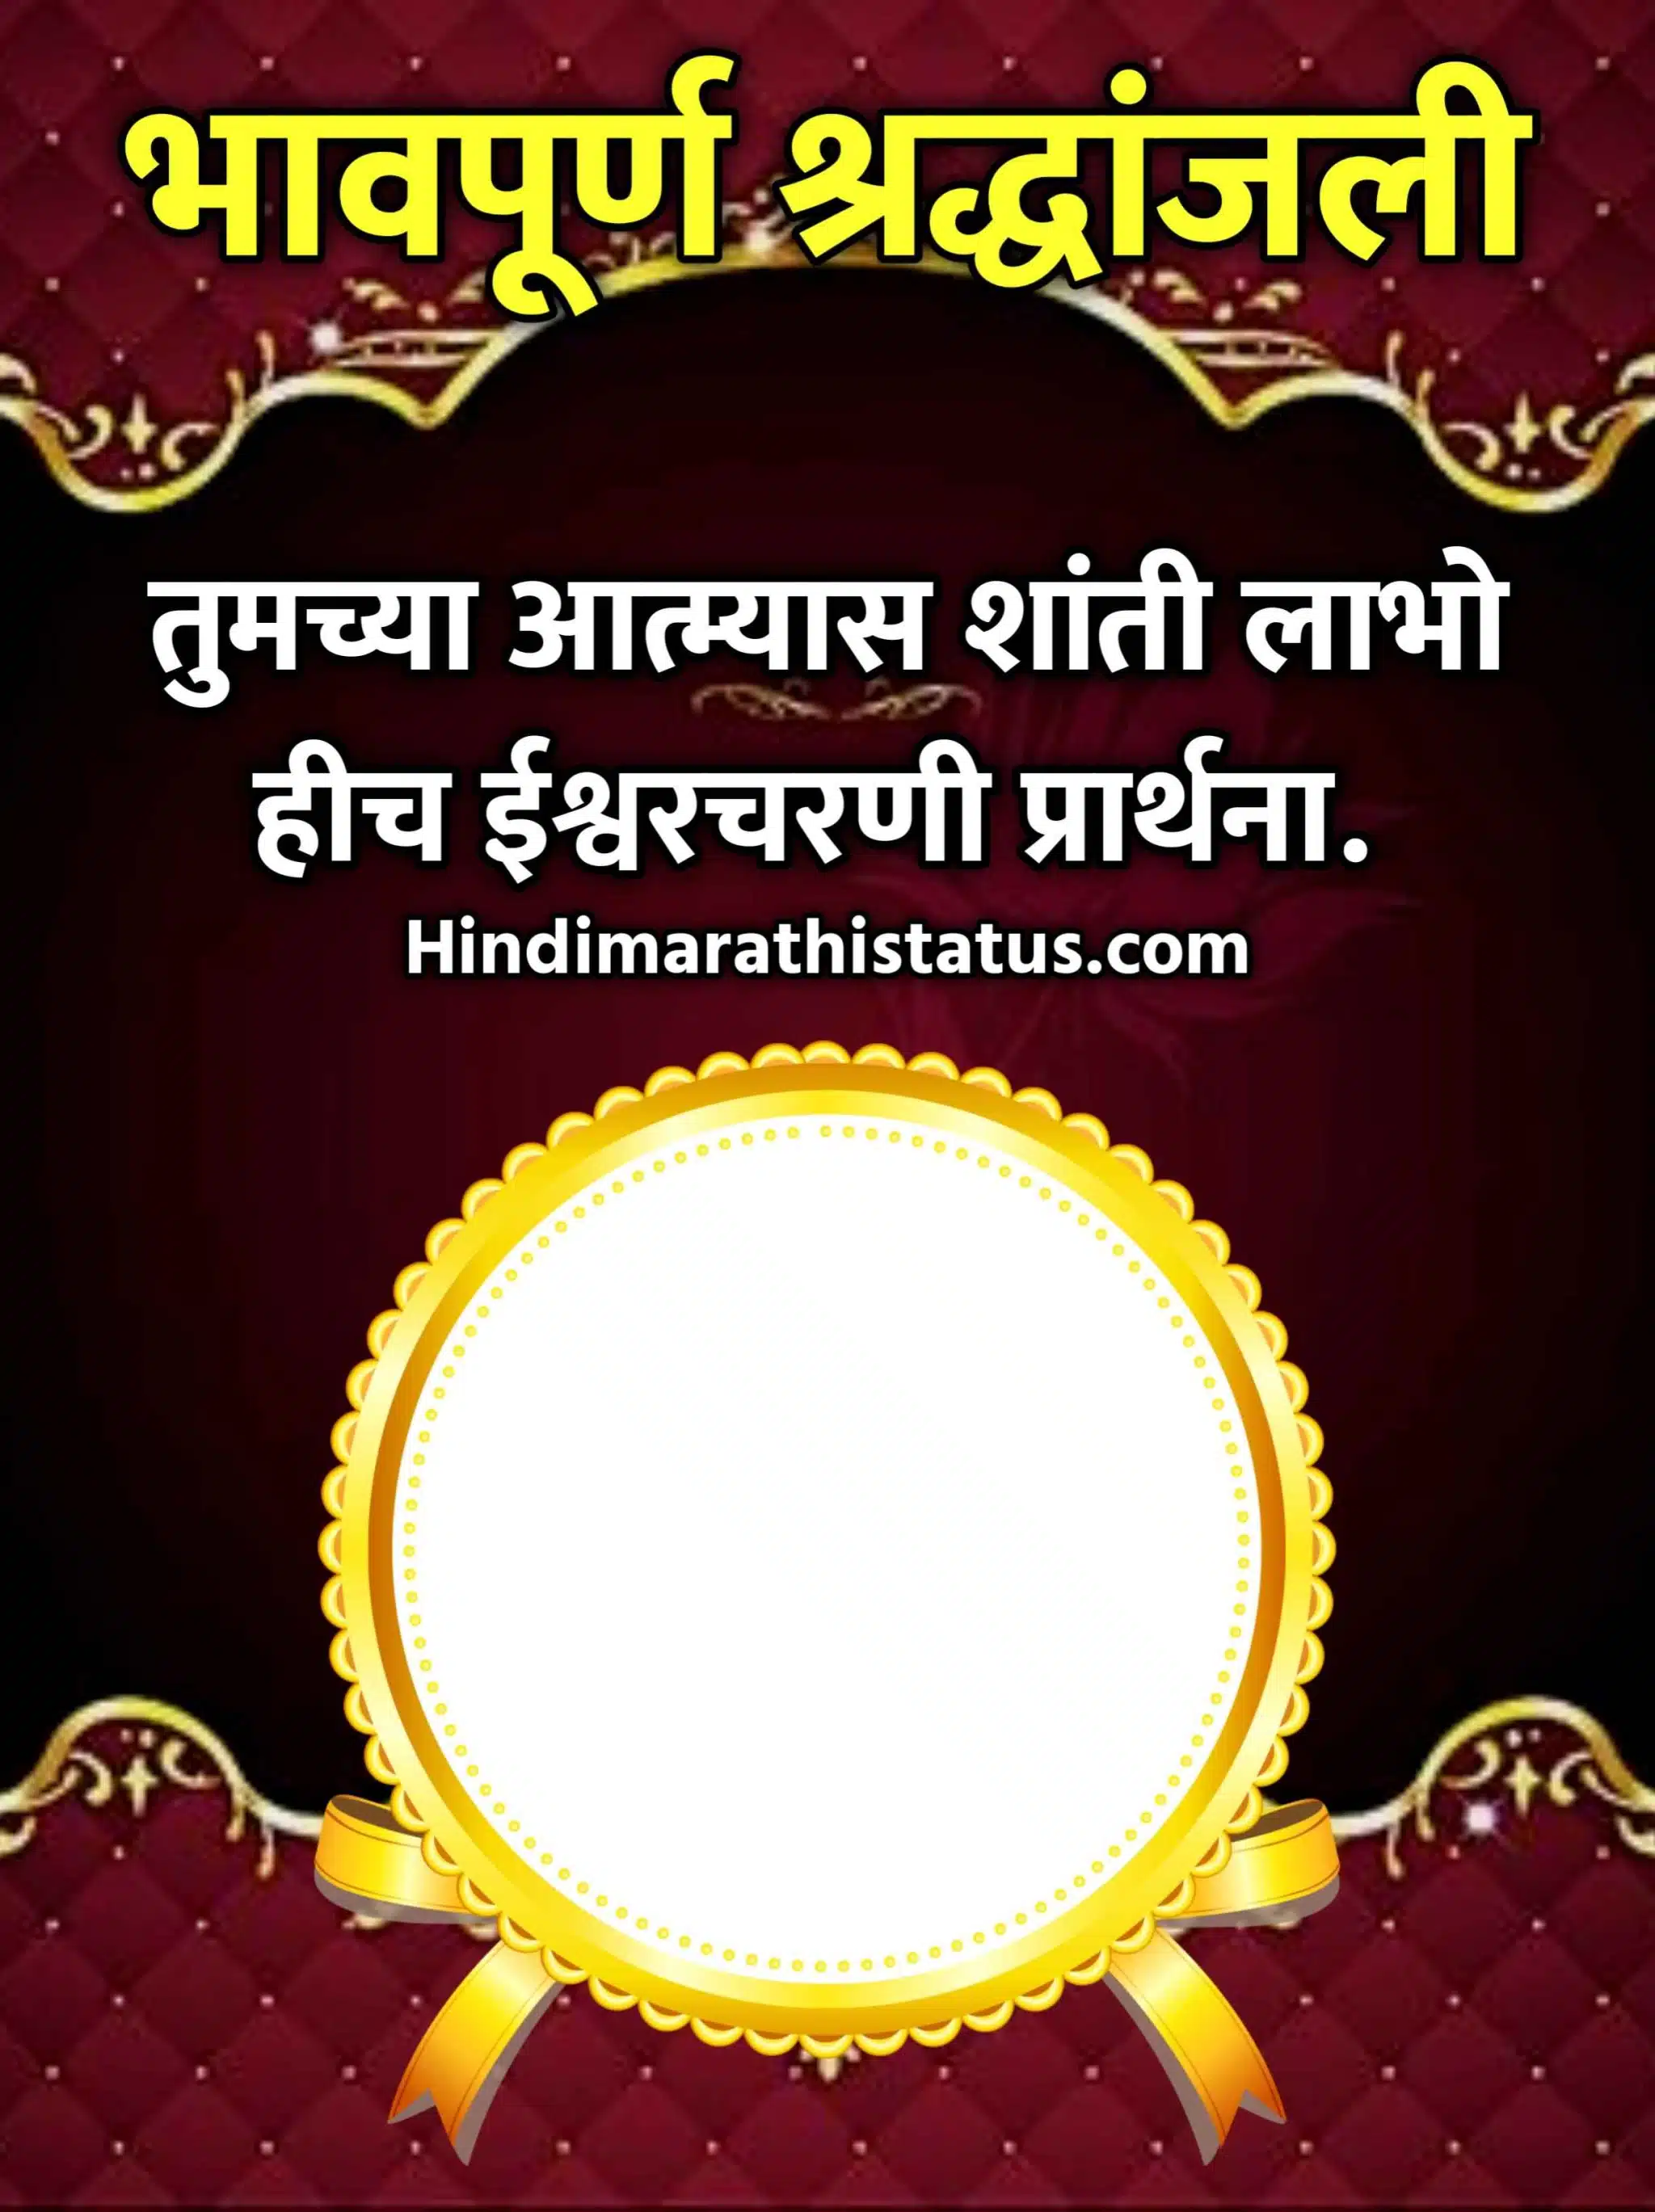 Marathi Bhavpurna Shradhanjali Background